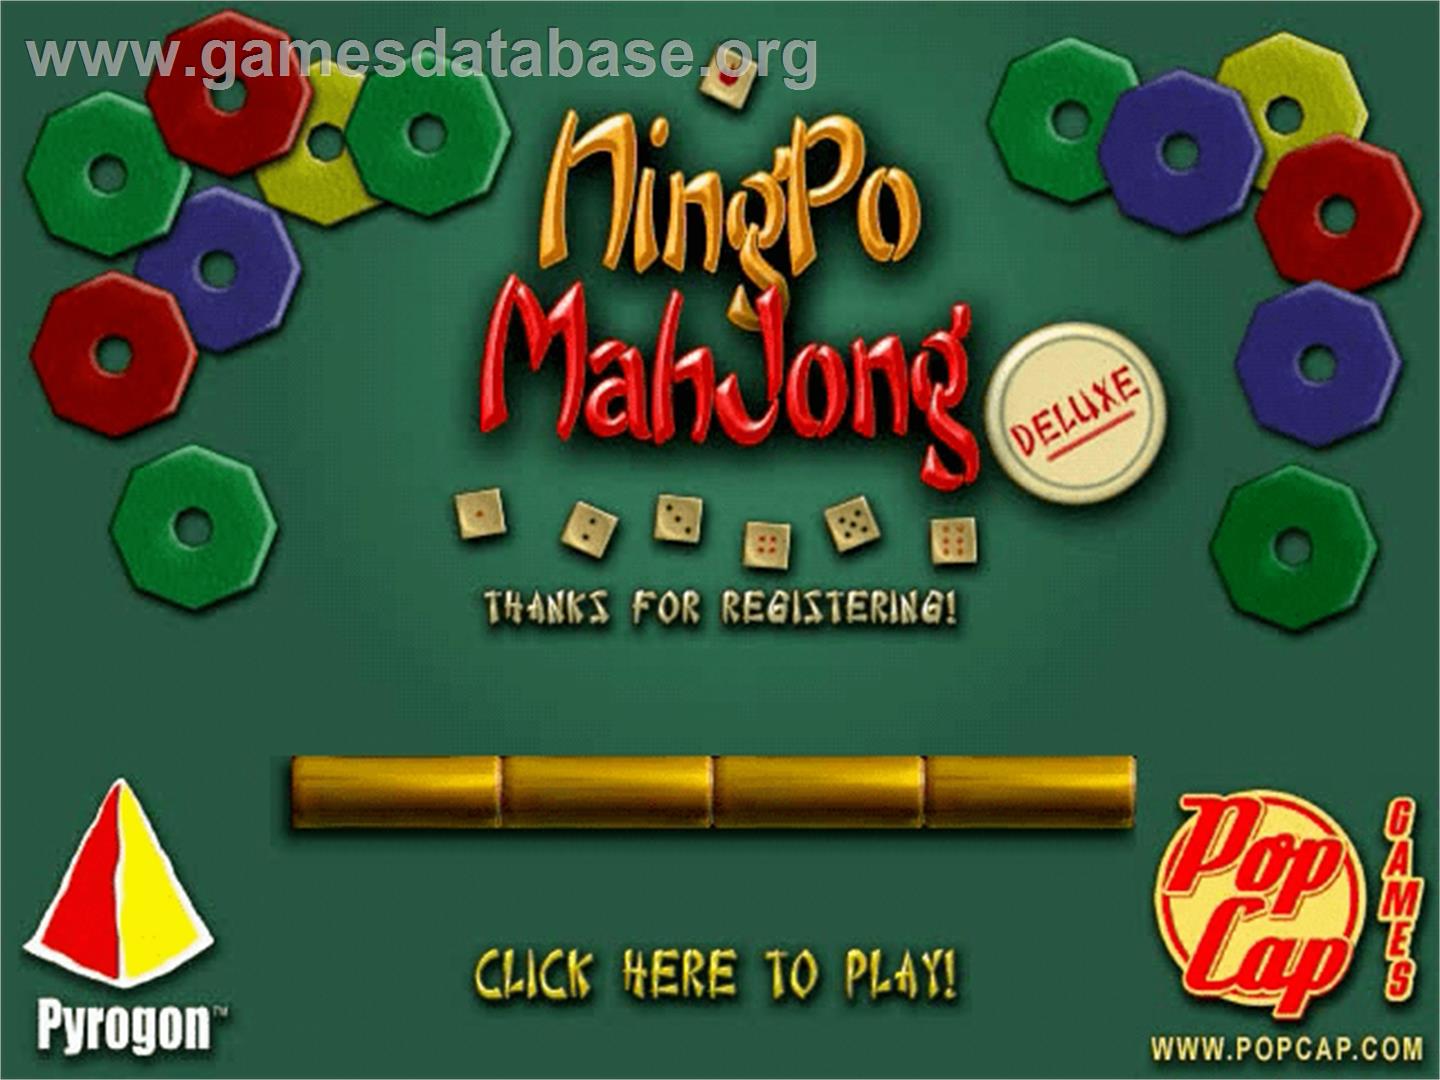 NingPo MahJong Deluxe - PopCap - Artwork - Title Screen